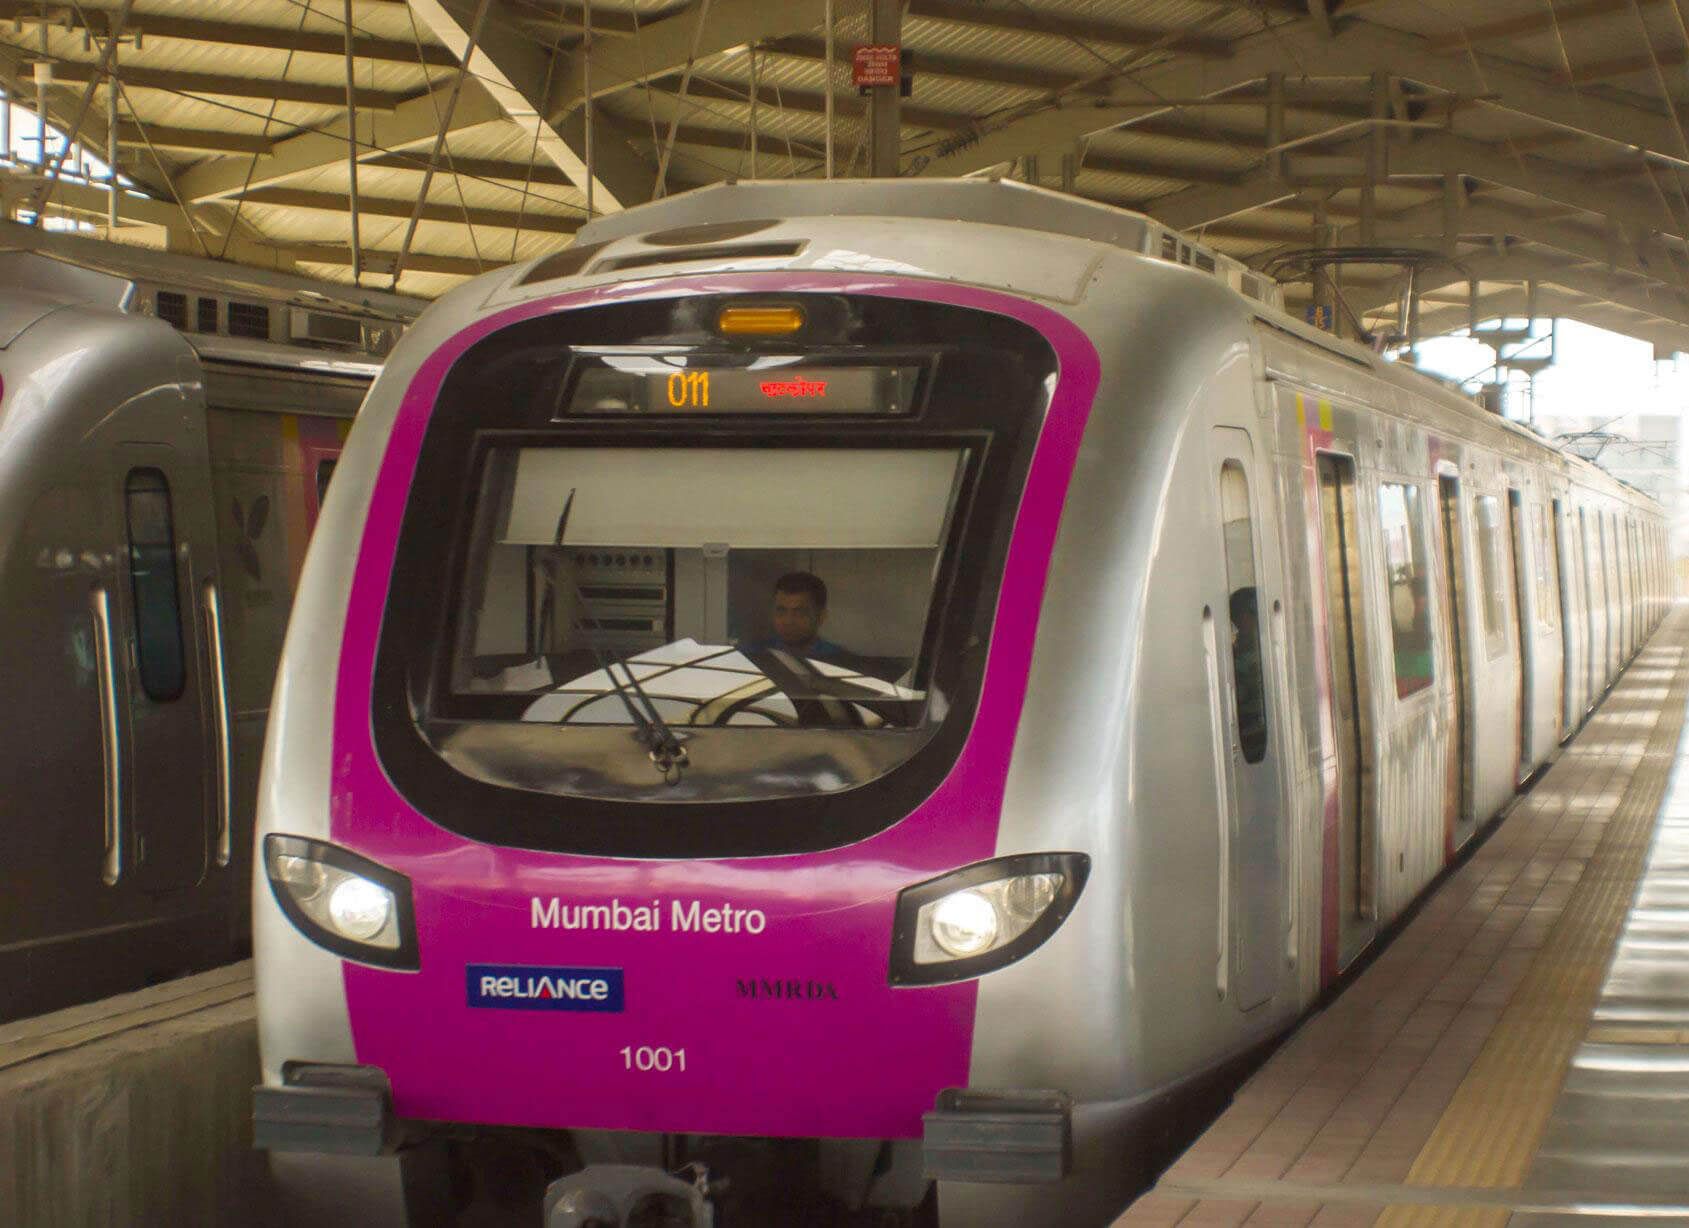 What is common between Taiwan Tourism Bureau and Mumbai metro?